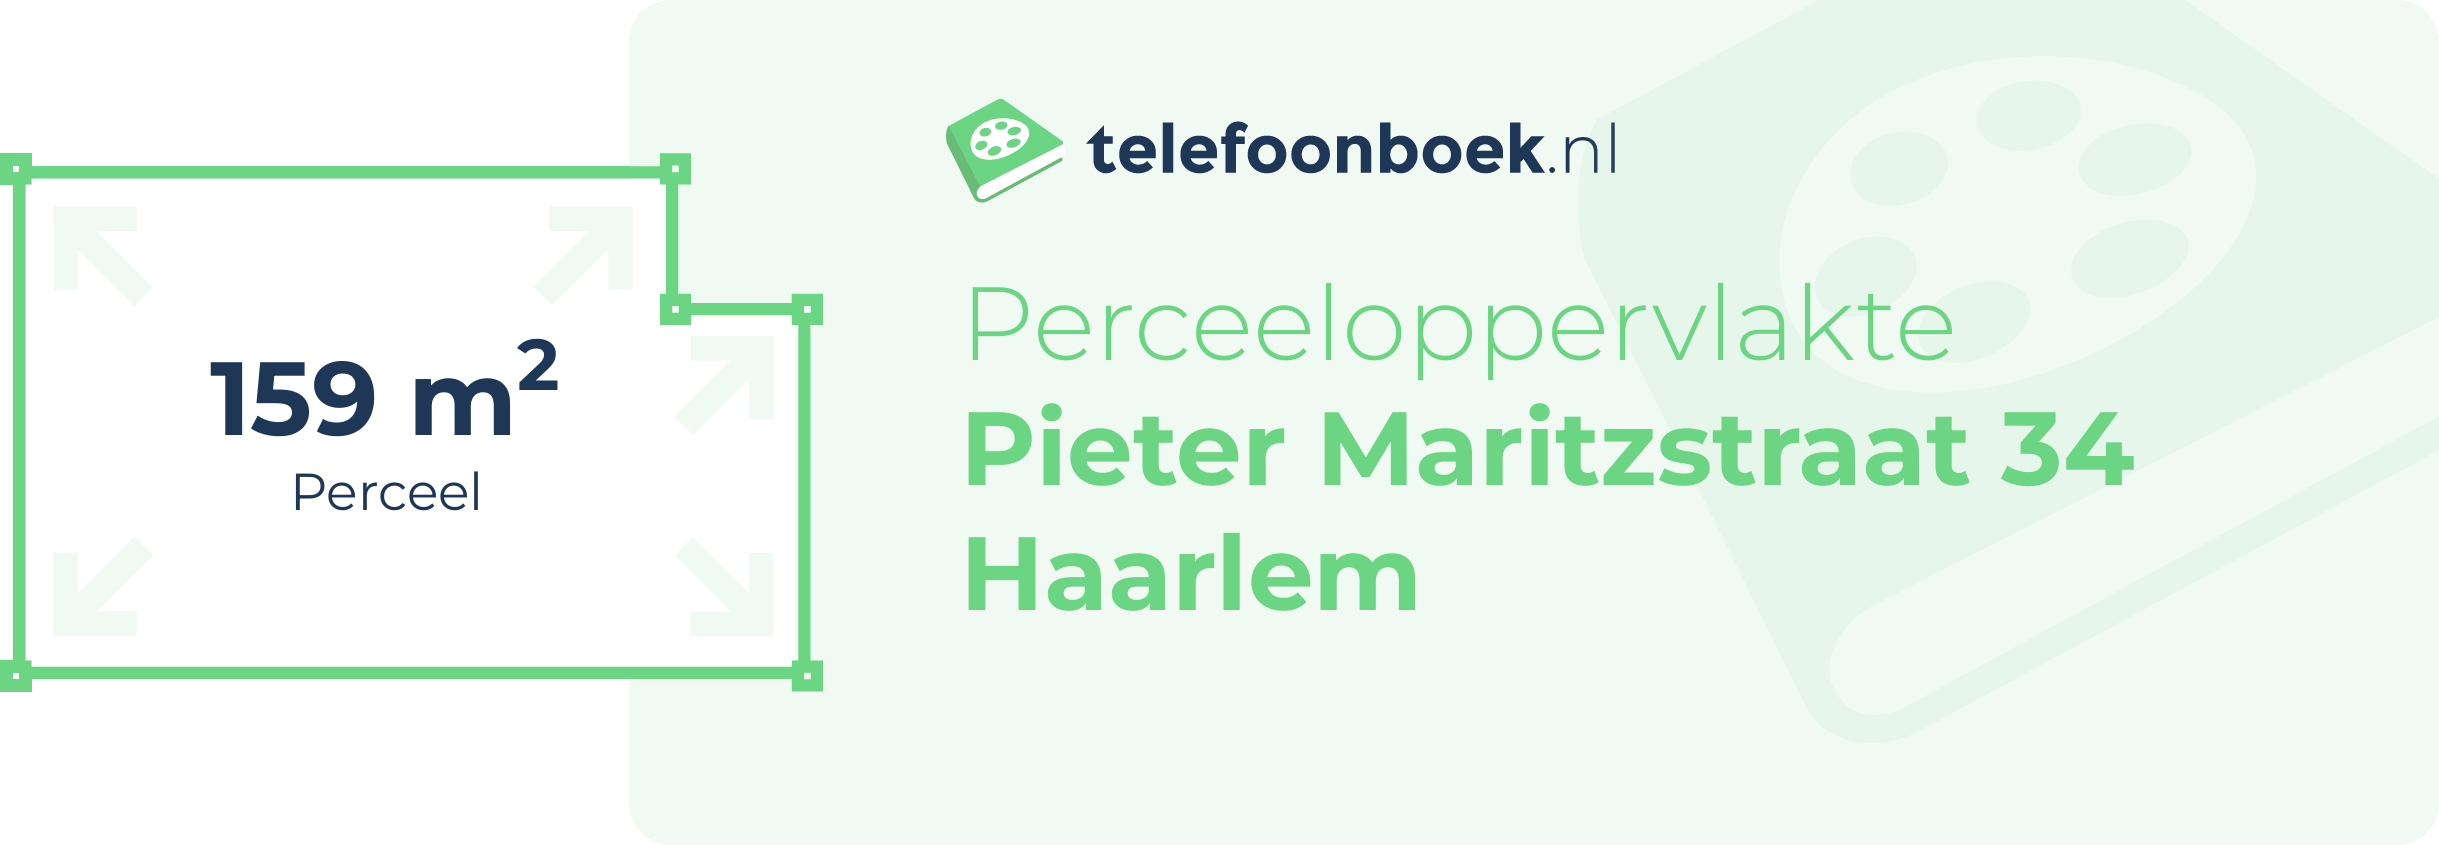 Perceeloppervlakte Pieter Maritzstraat 34 Haarlem